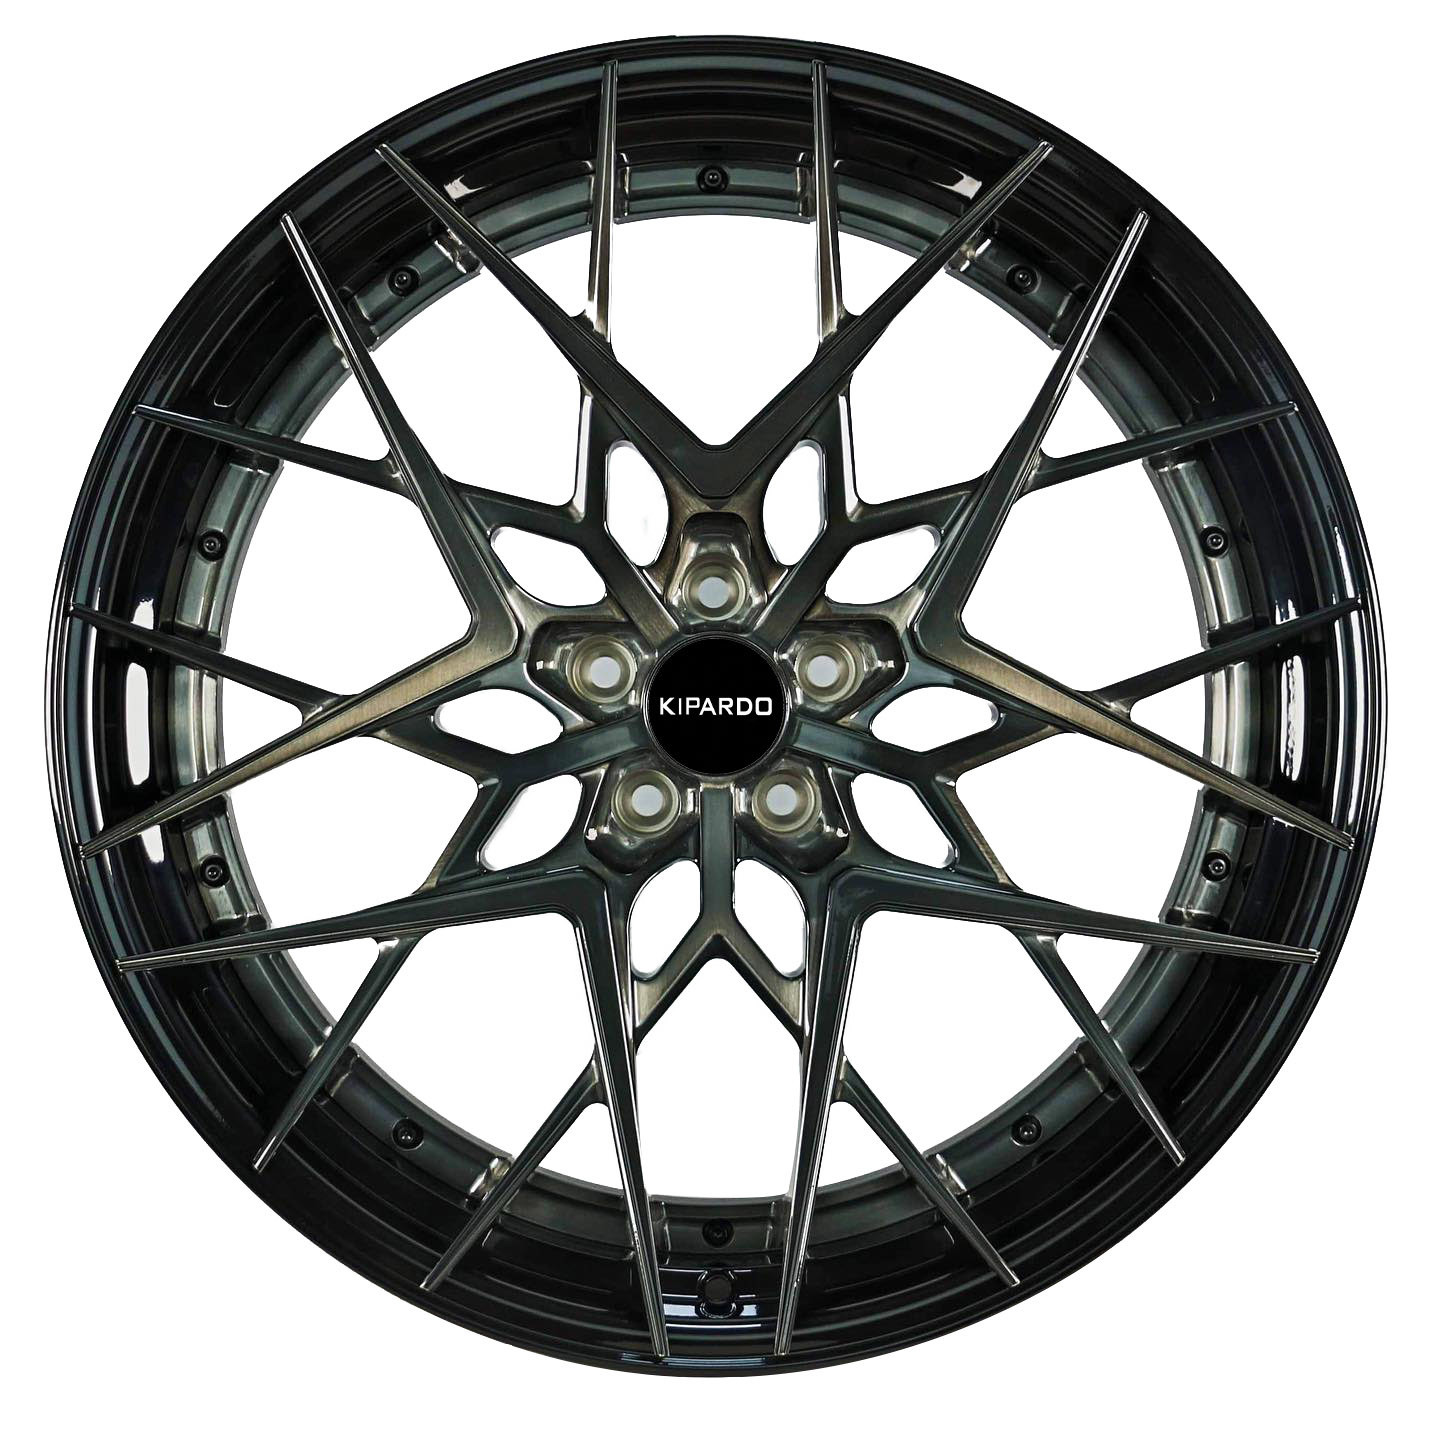 Custom Forged Car Rims Alloy Wheel for BMW, Mercedes, 911, Lamborghini 5X114.3 5X130 6X139.7